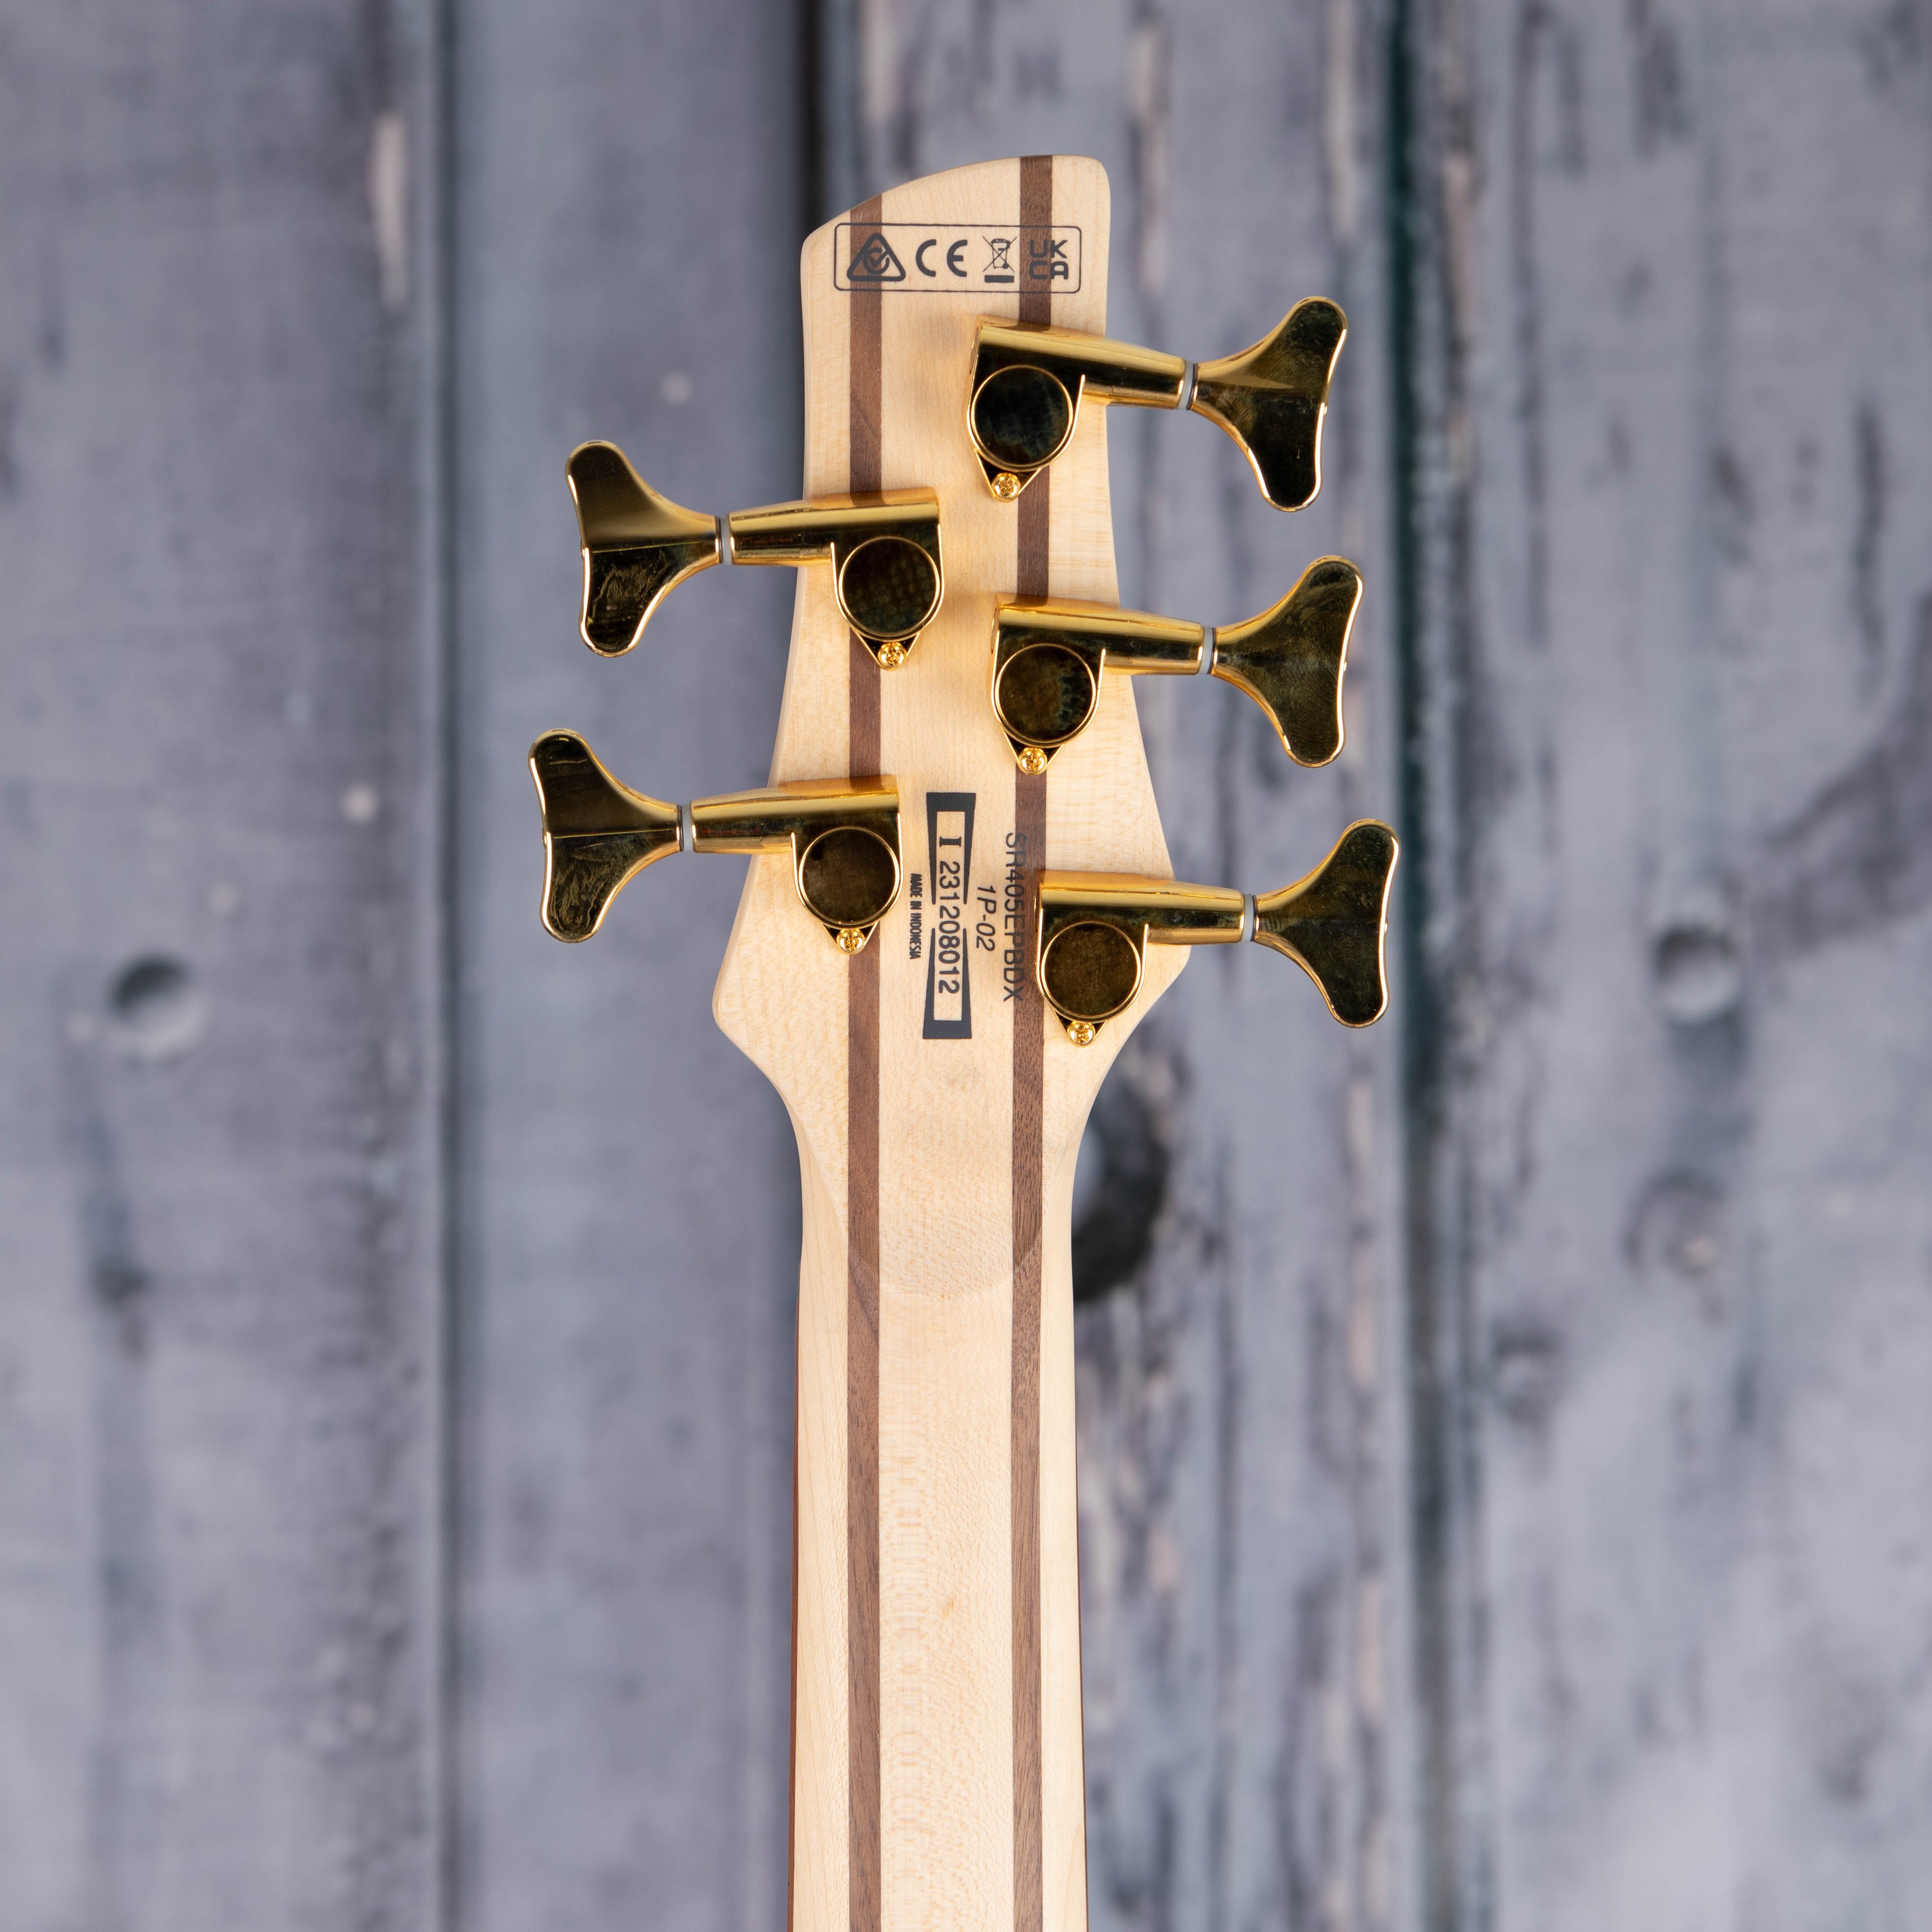 Ibanez Standard SR405EPBDX 5-String Electric Bass Guitar, Mars Gold Metallic Burst, back headstock